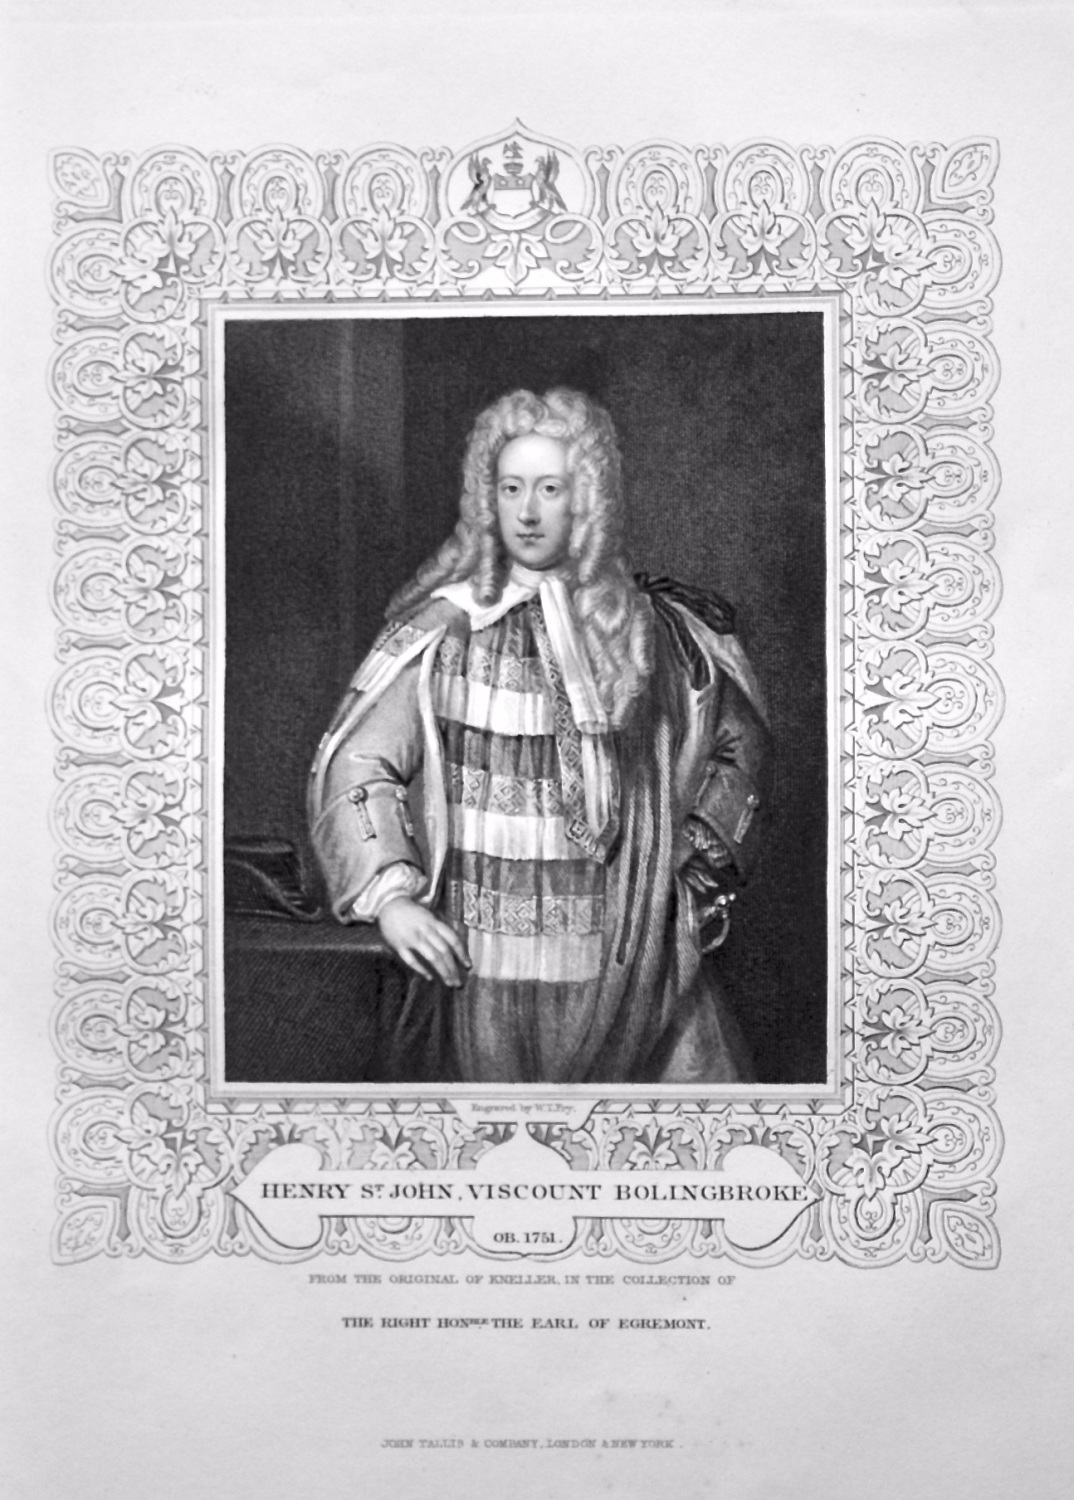 Henry St. John, Viscount Bolingbroke. OB. 1751.  From the Original of Knell